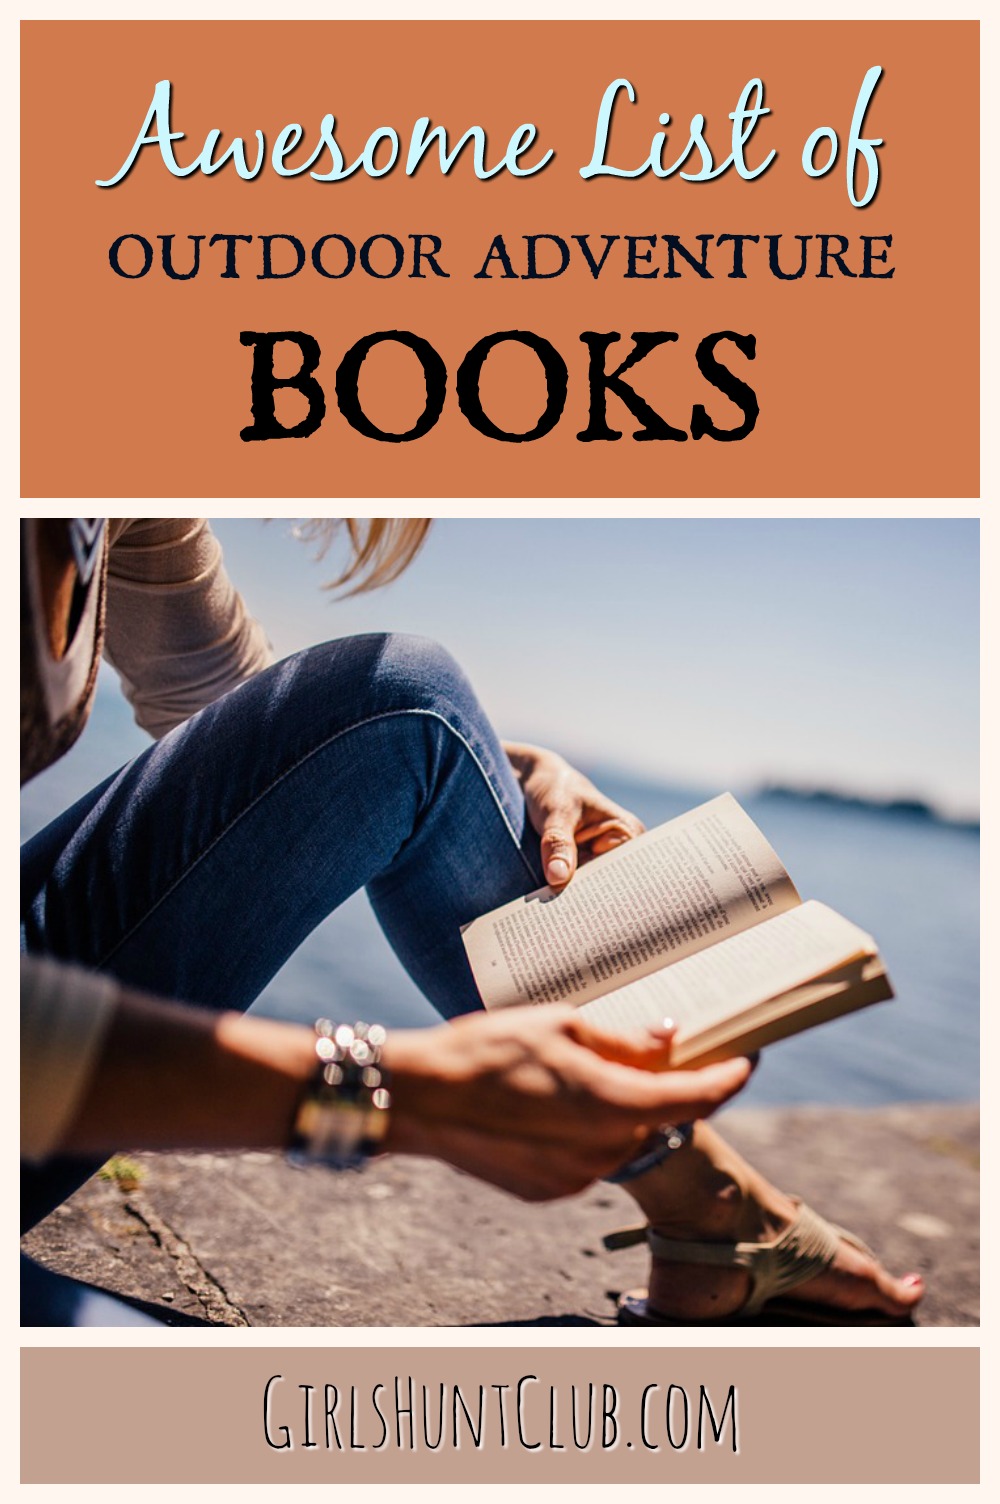 Great outdoor adventure books